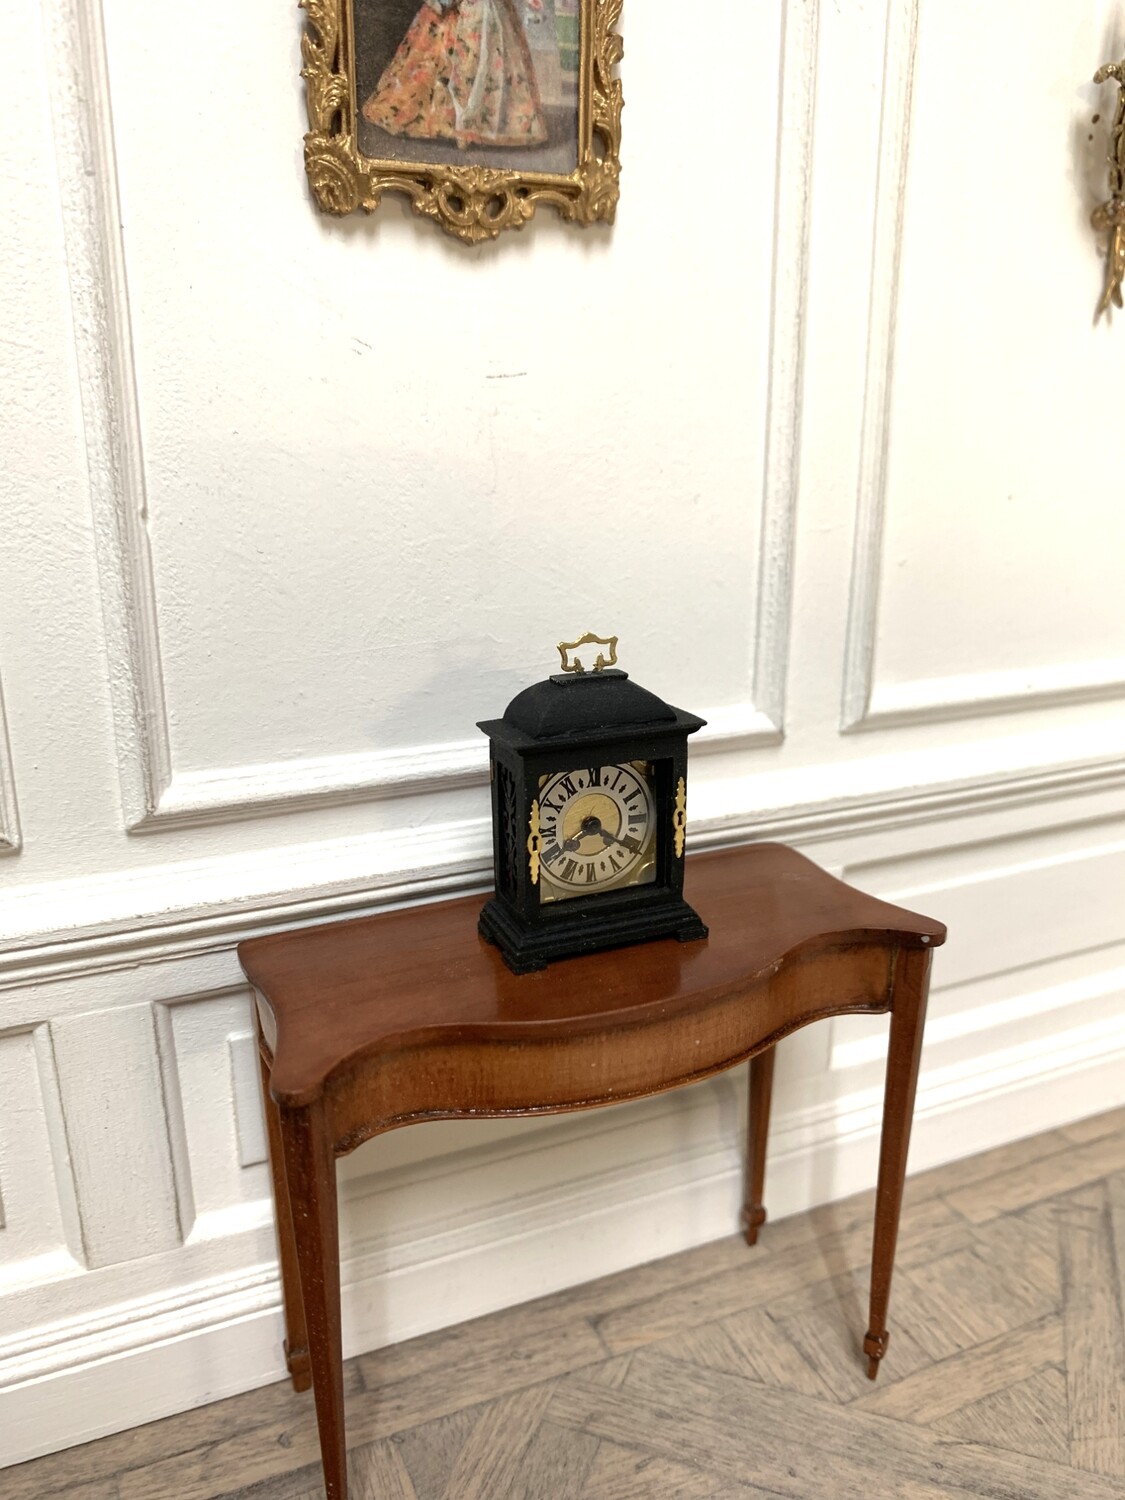 17th century small bracket clock